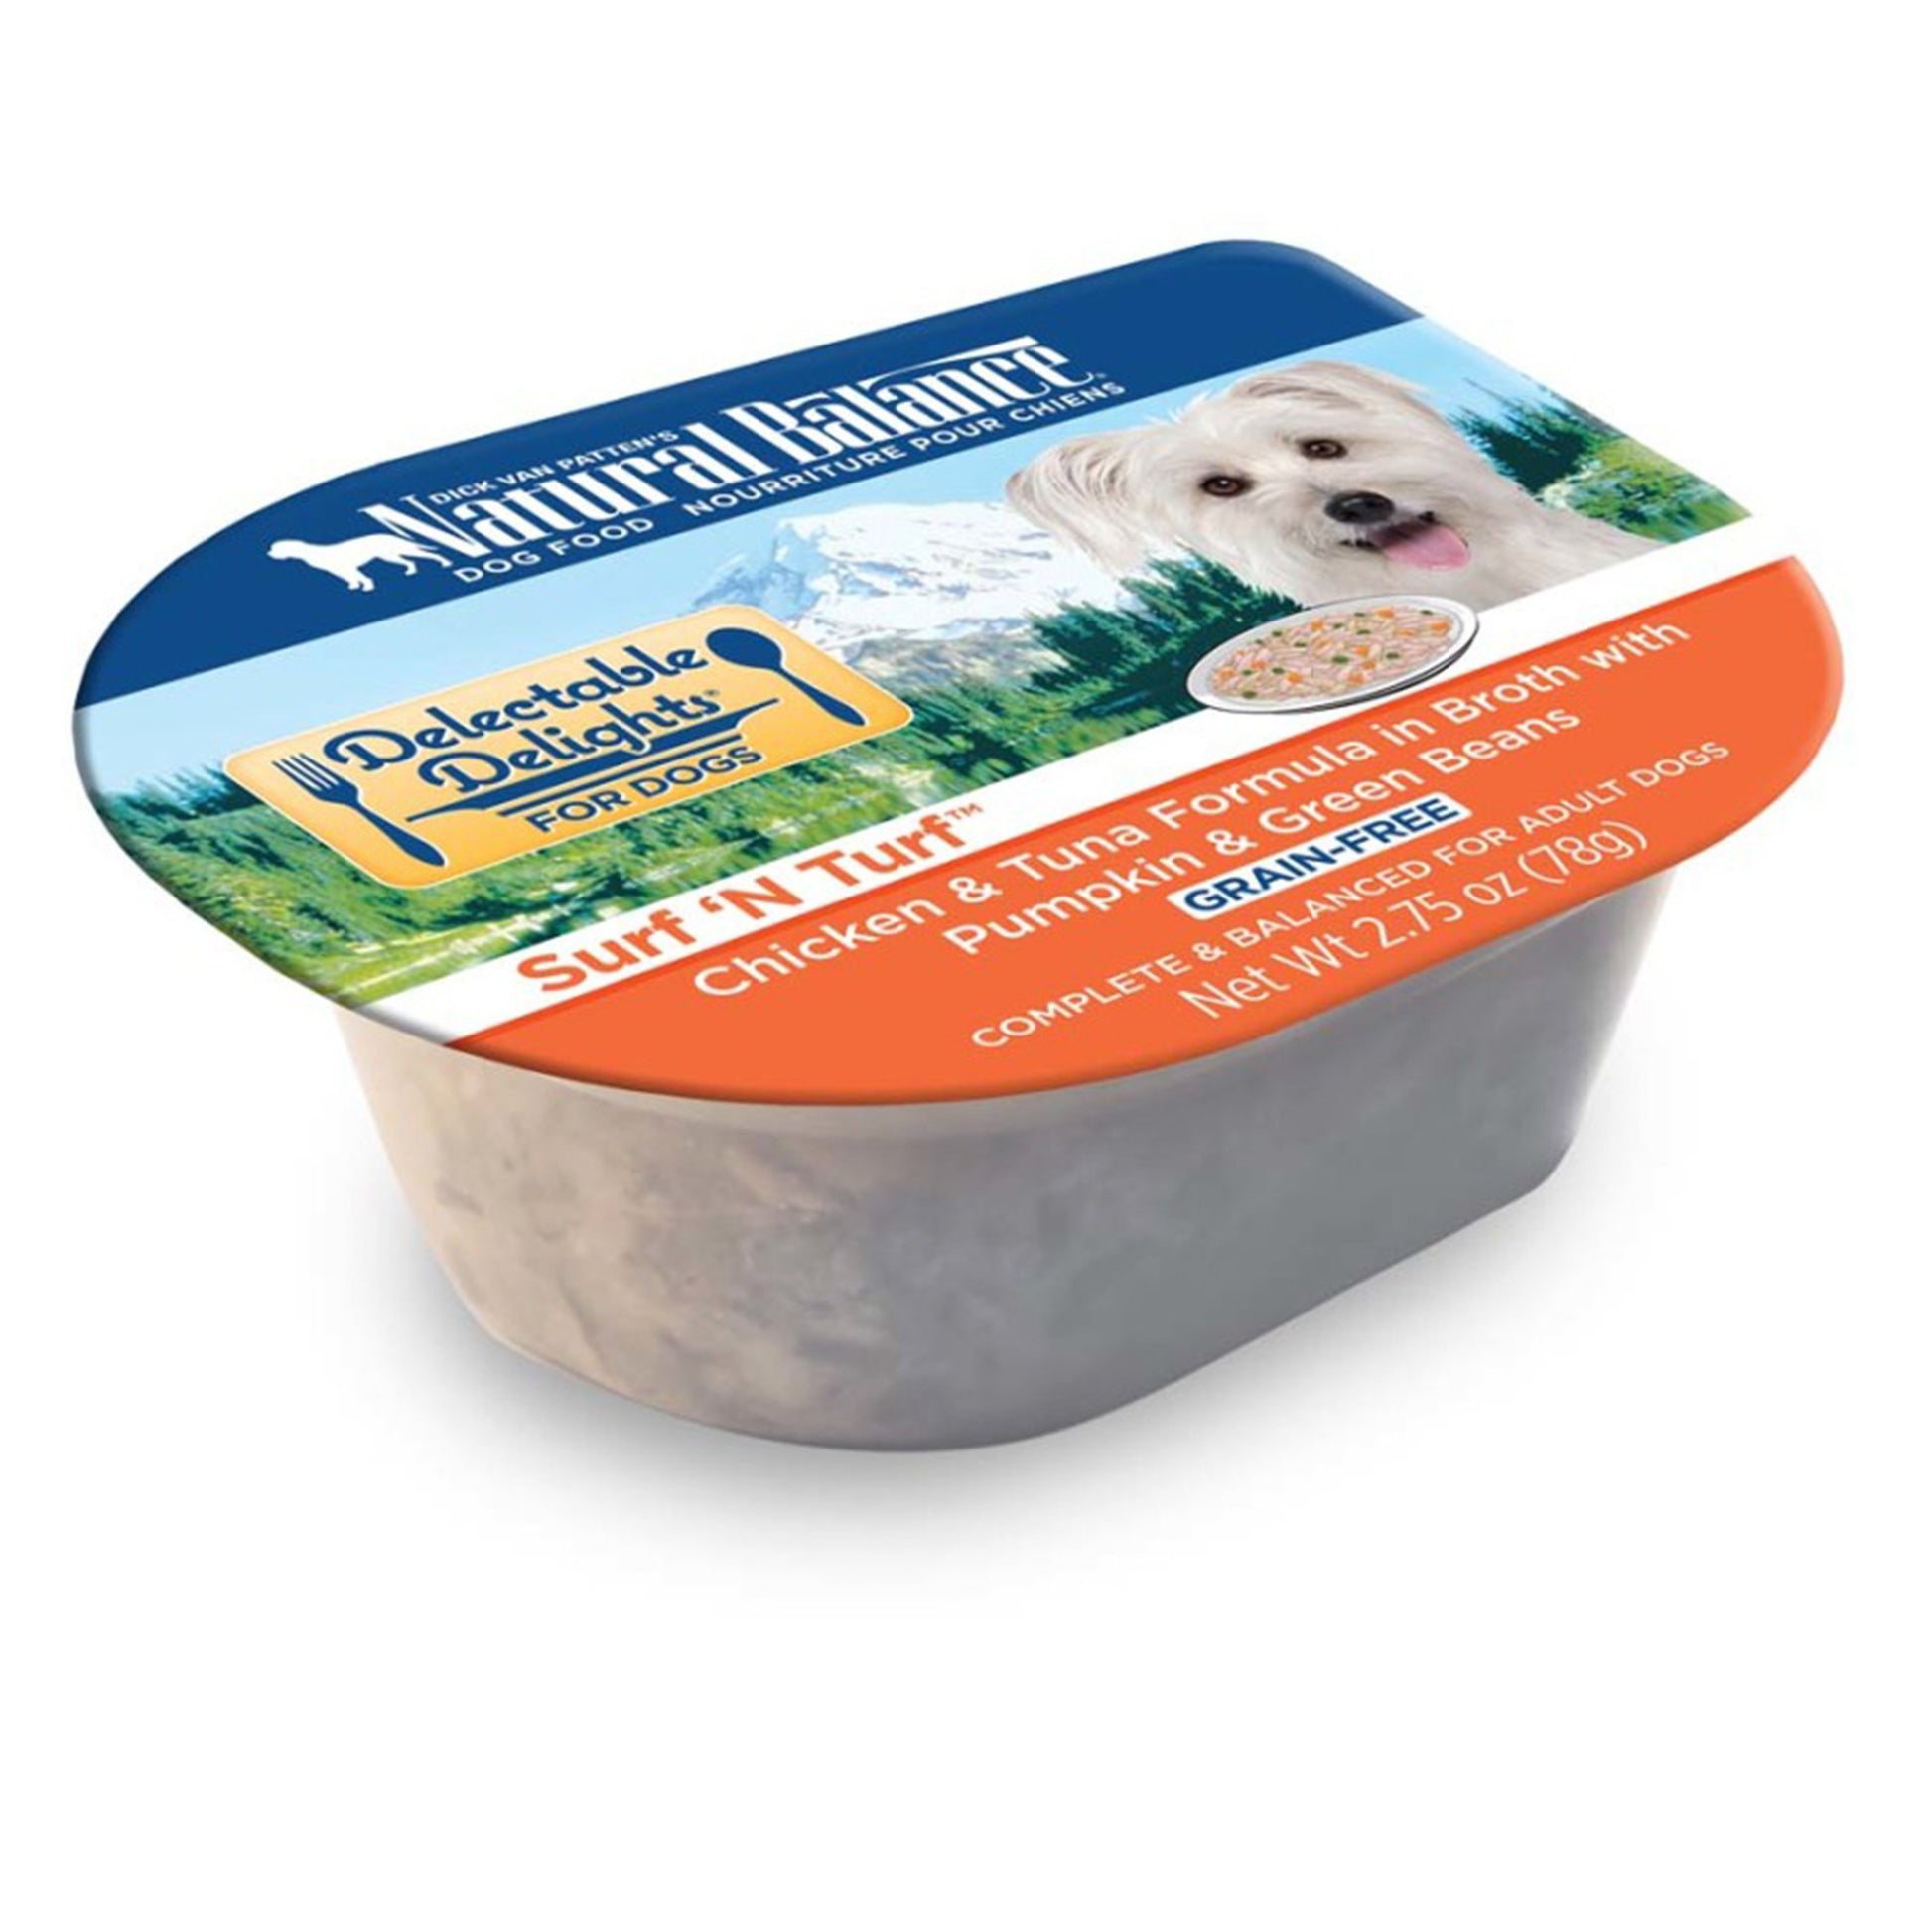 Natural Balance Pet Foods Delectable Delights Grain Free Wet Dog Food Surf 'N Turf in Broth, 2.75 oz, Natural Balance